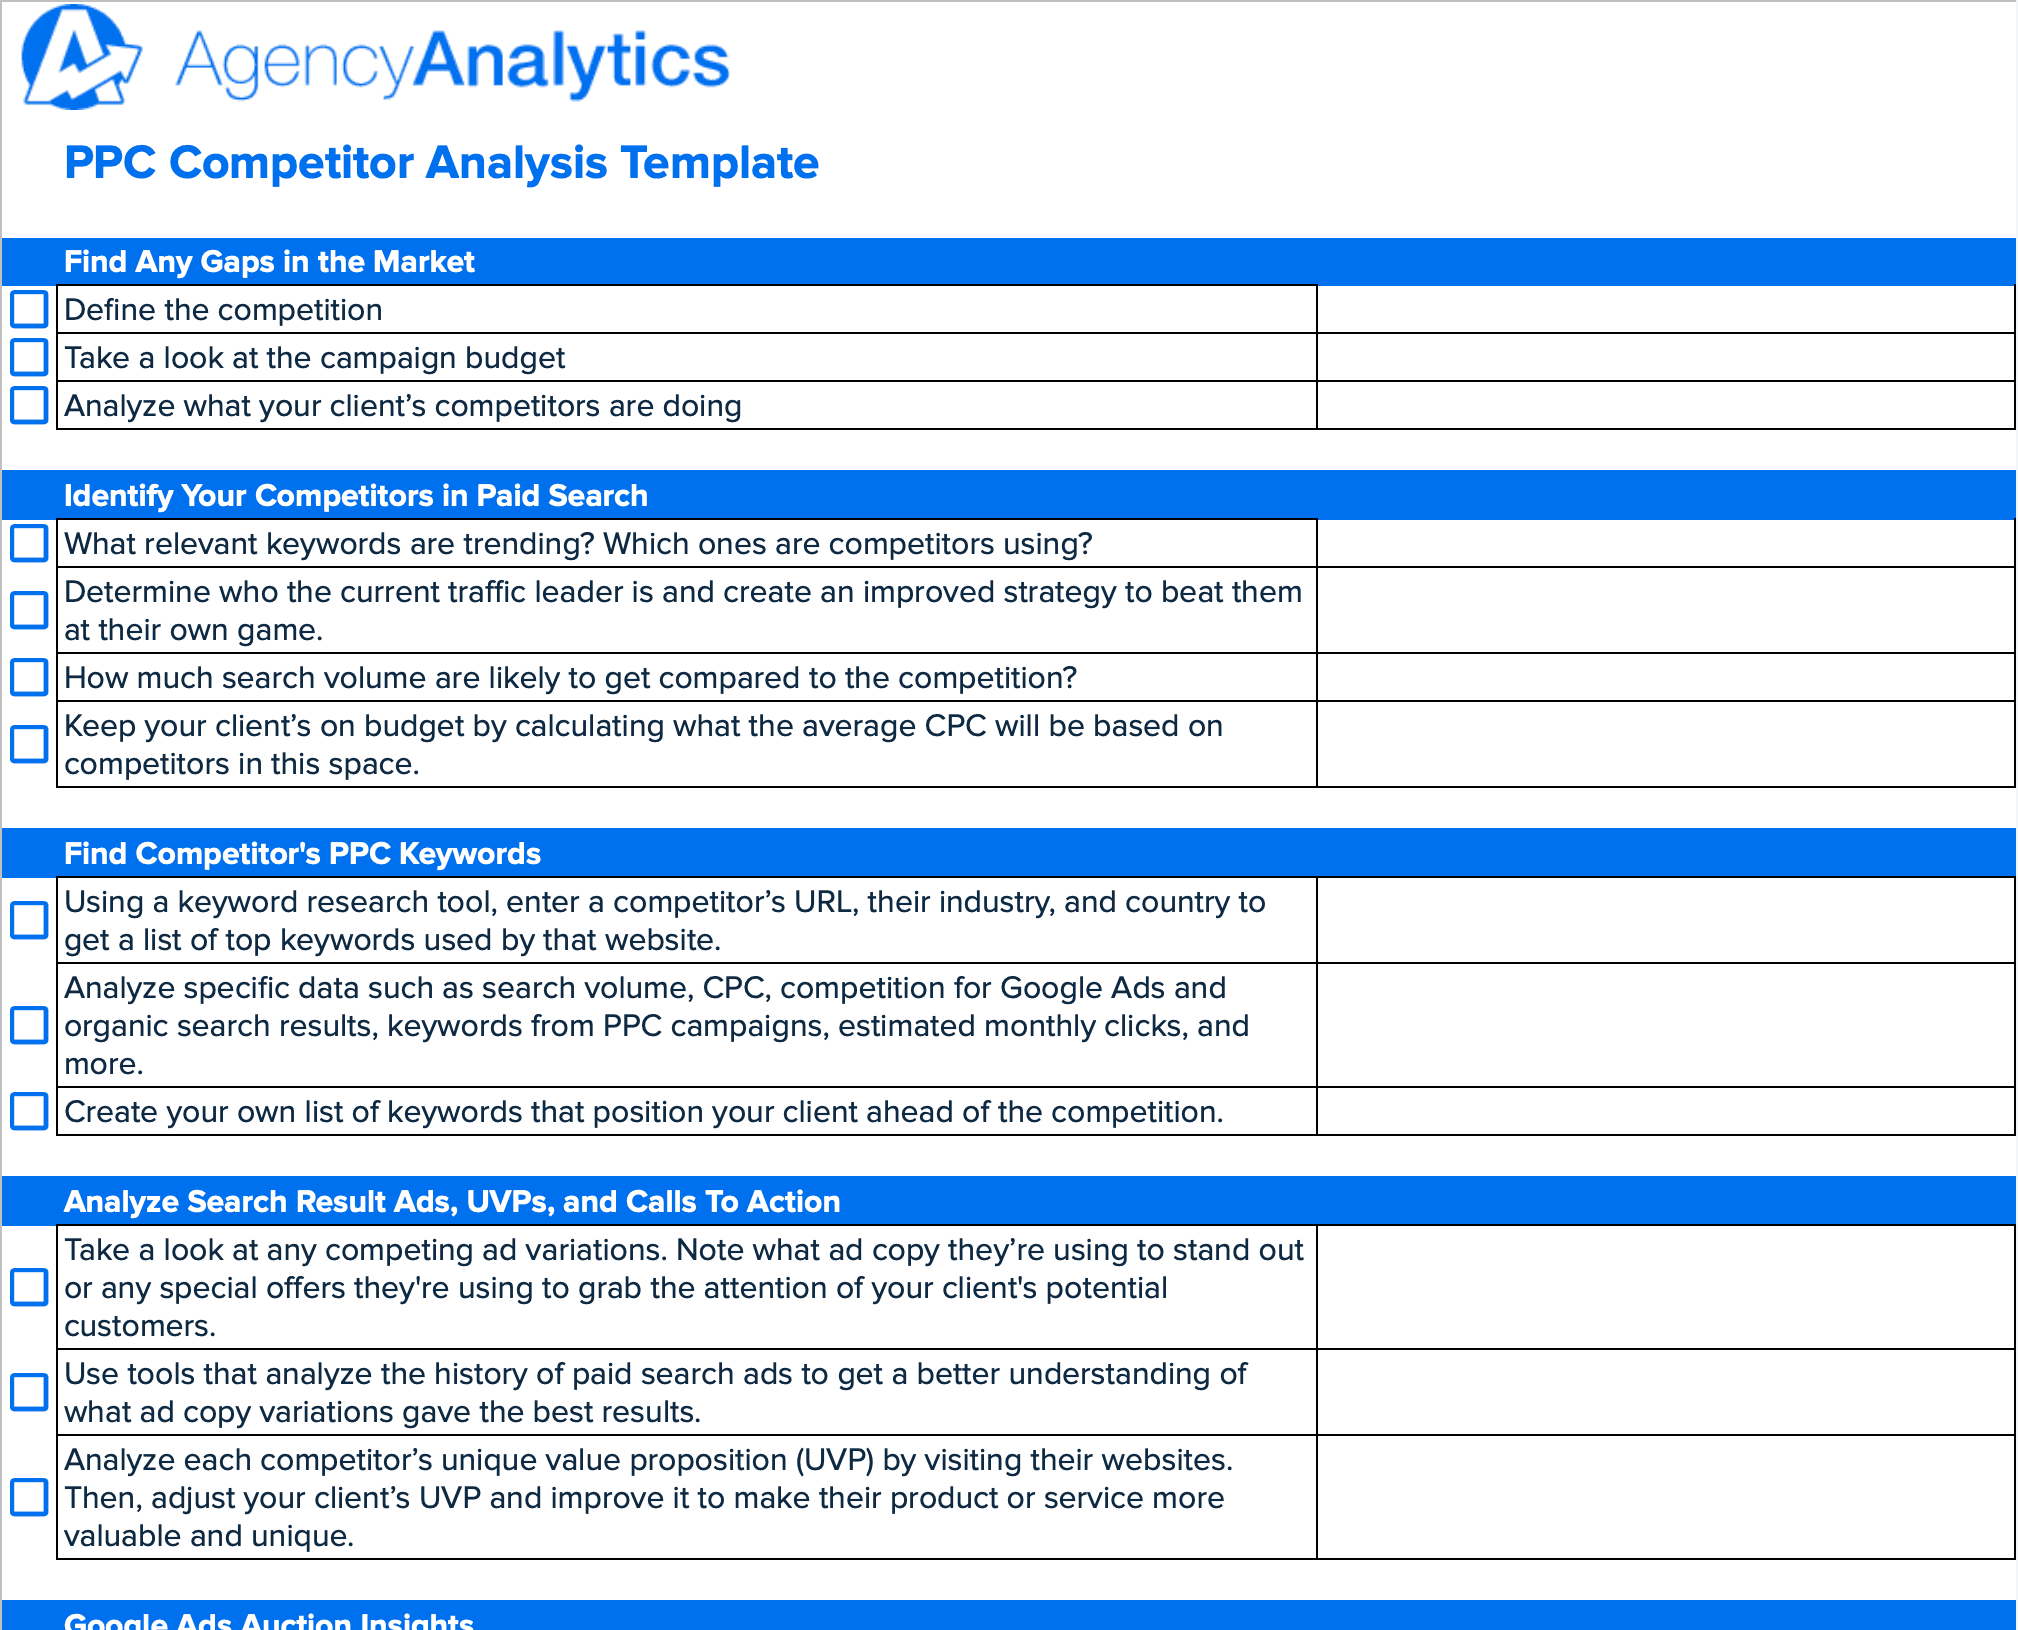 AgencyAnalytics PPC Competitor Analysis Template